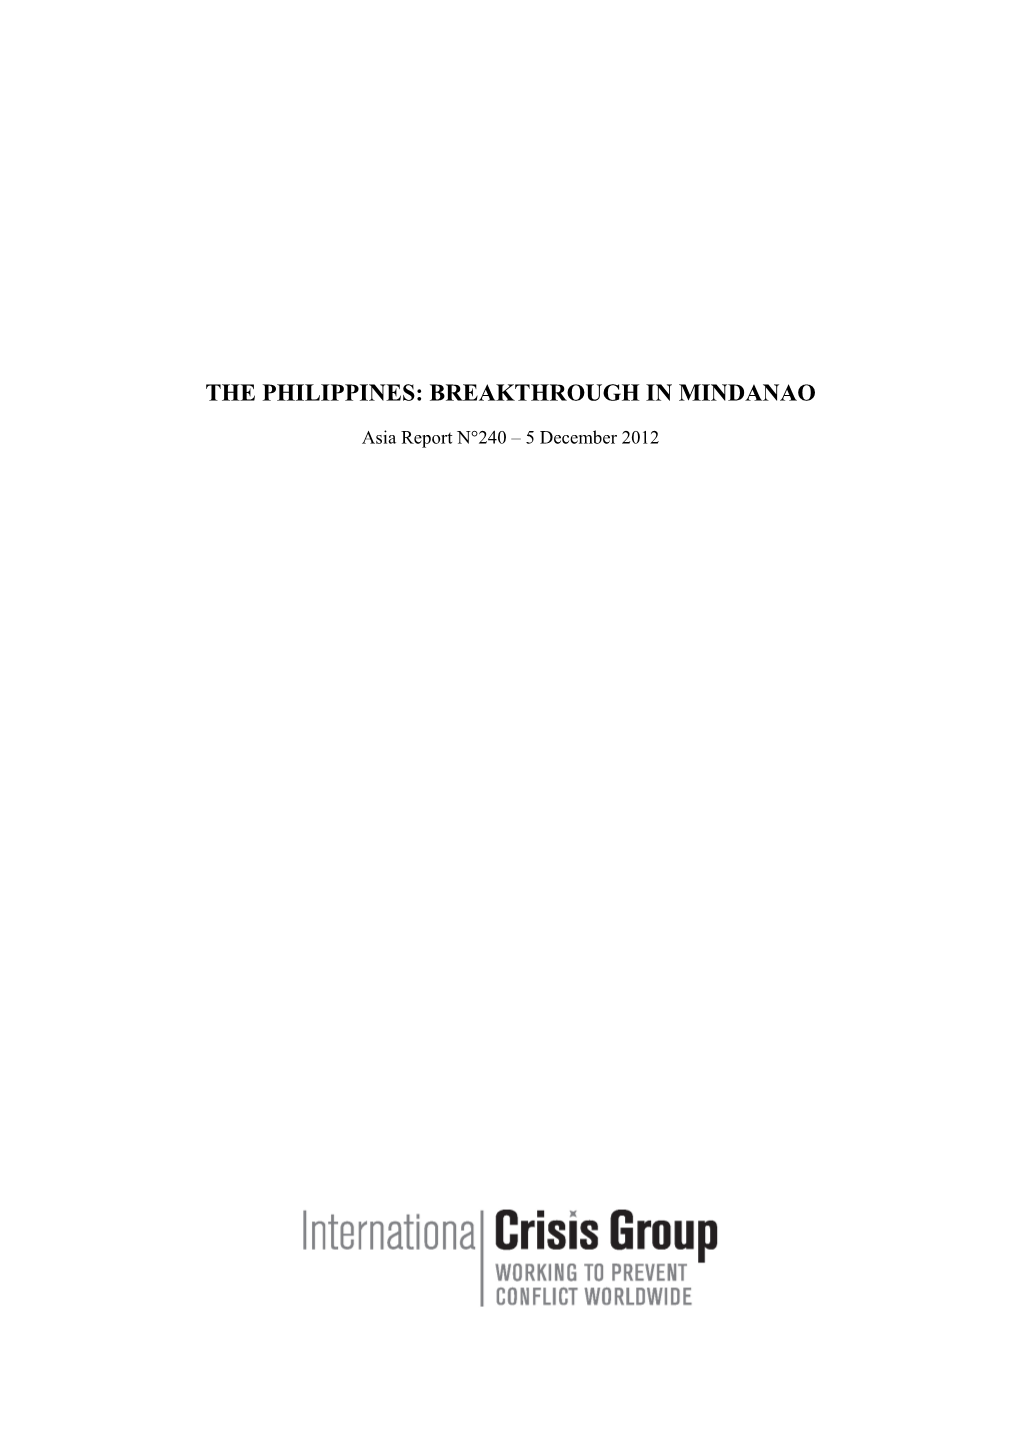 The Philippines: Breakthrough in Mindanao